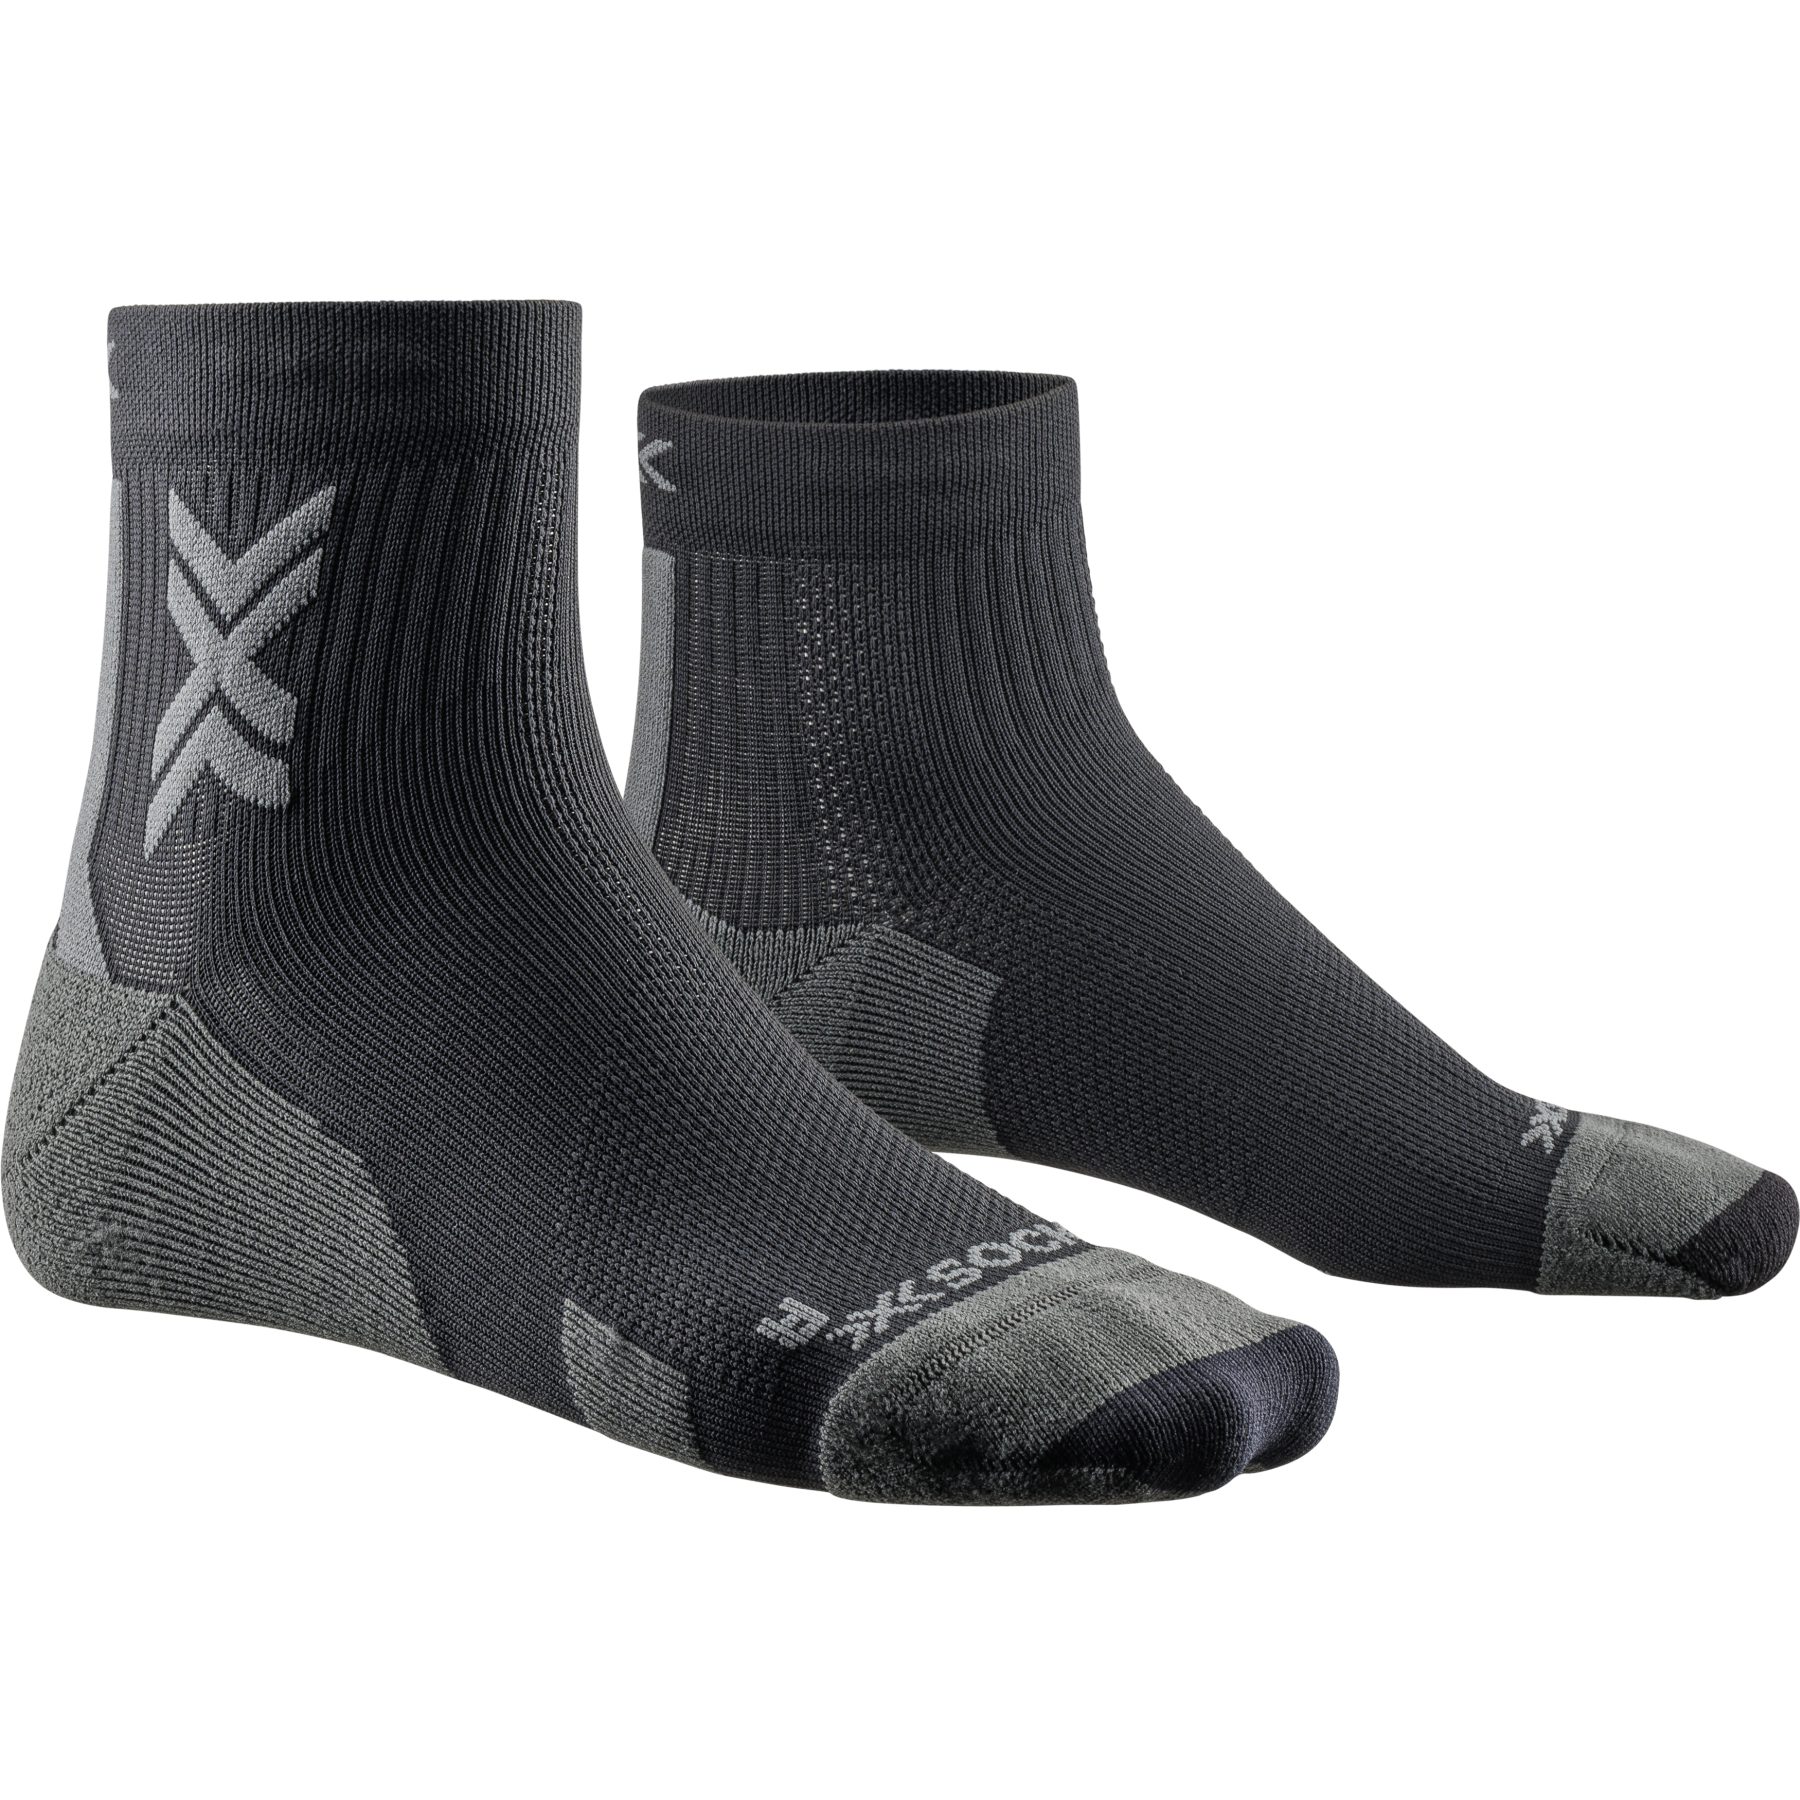 Image of X-Socks Run Discover Ankle Socks Men - black/charcoal